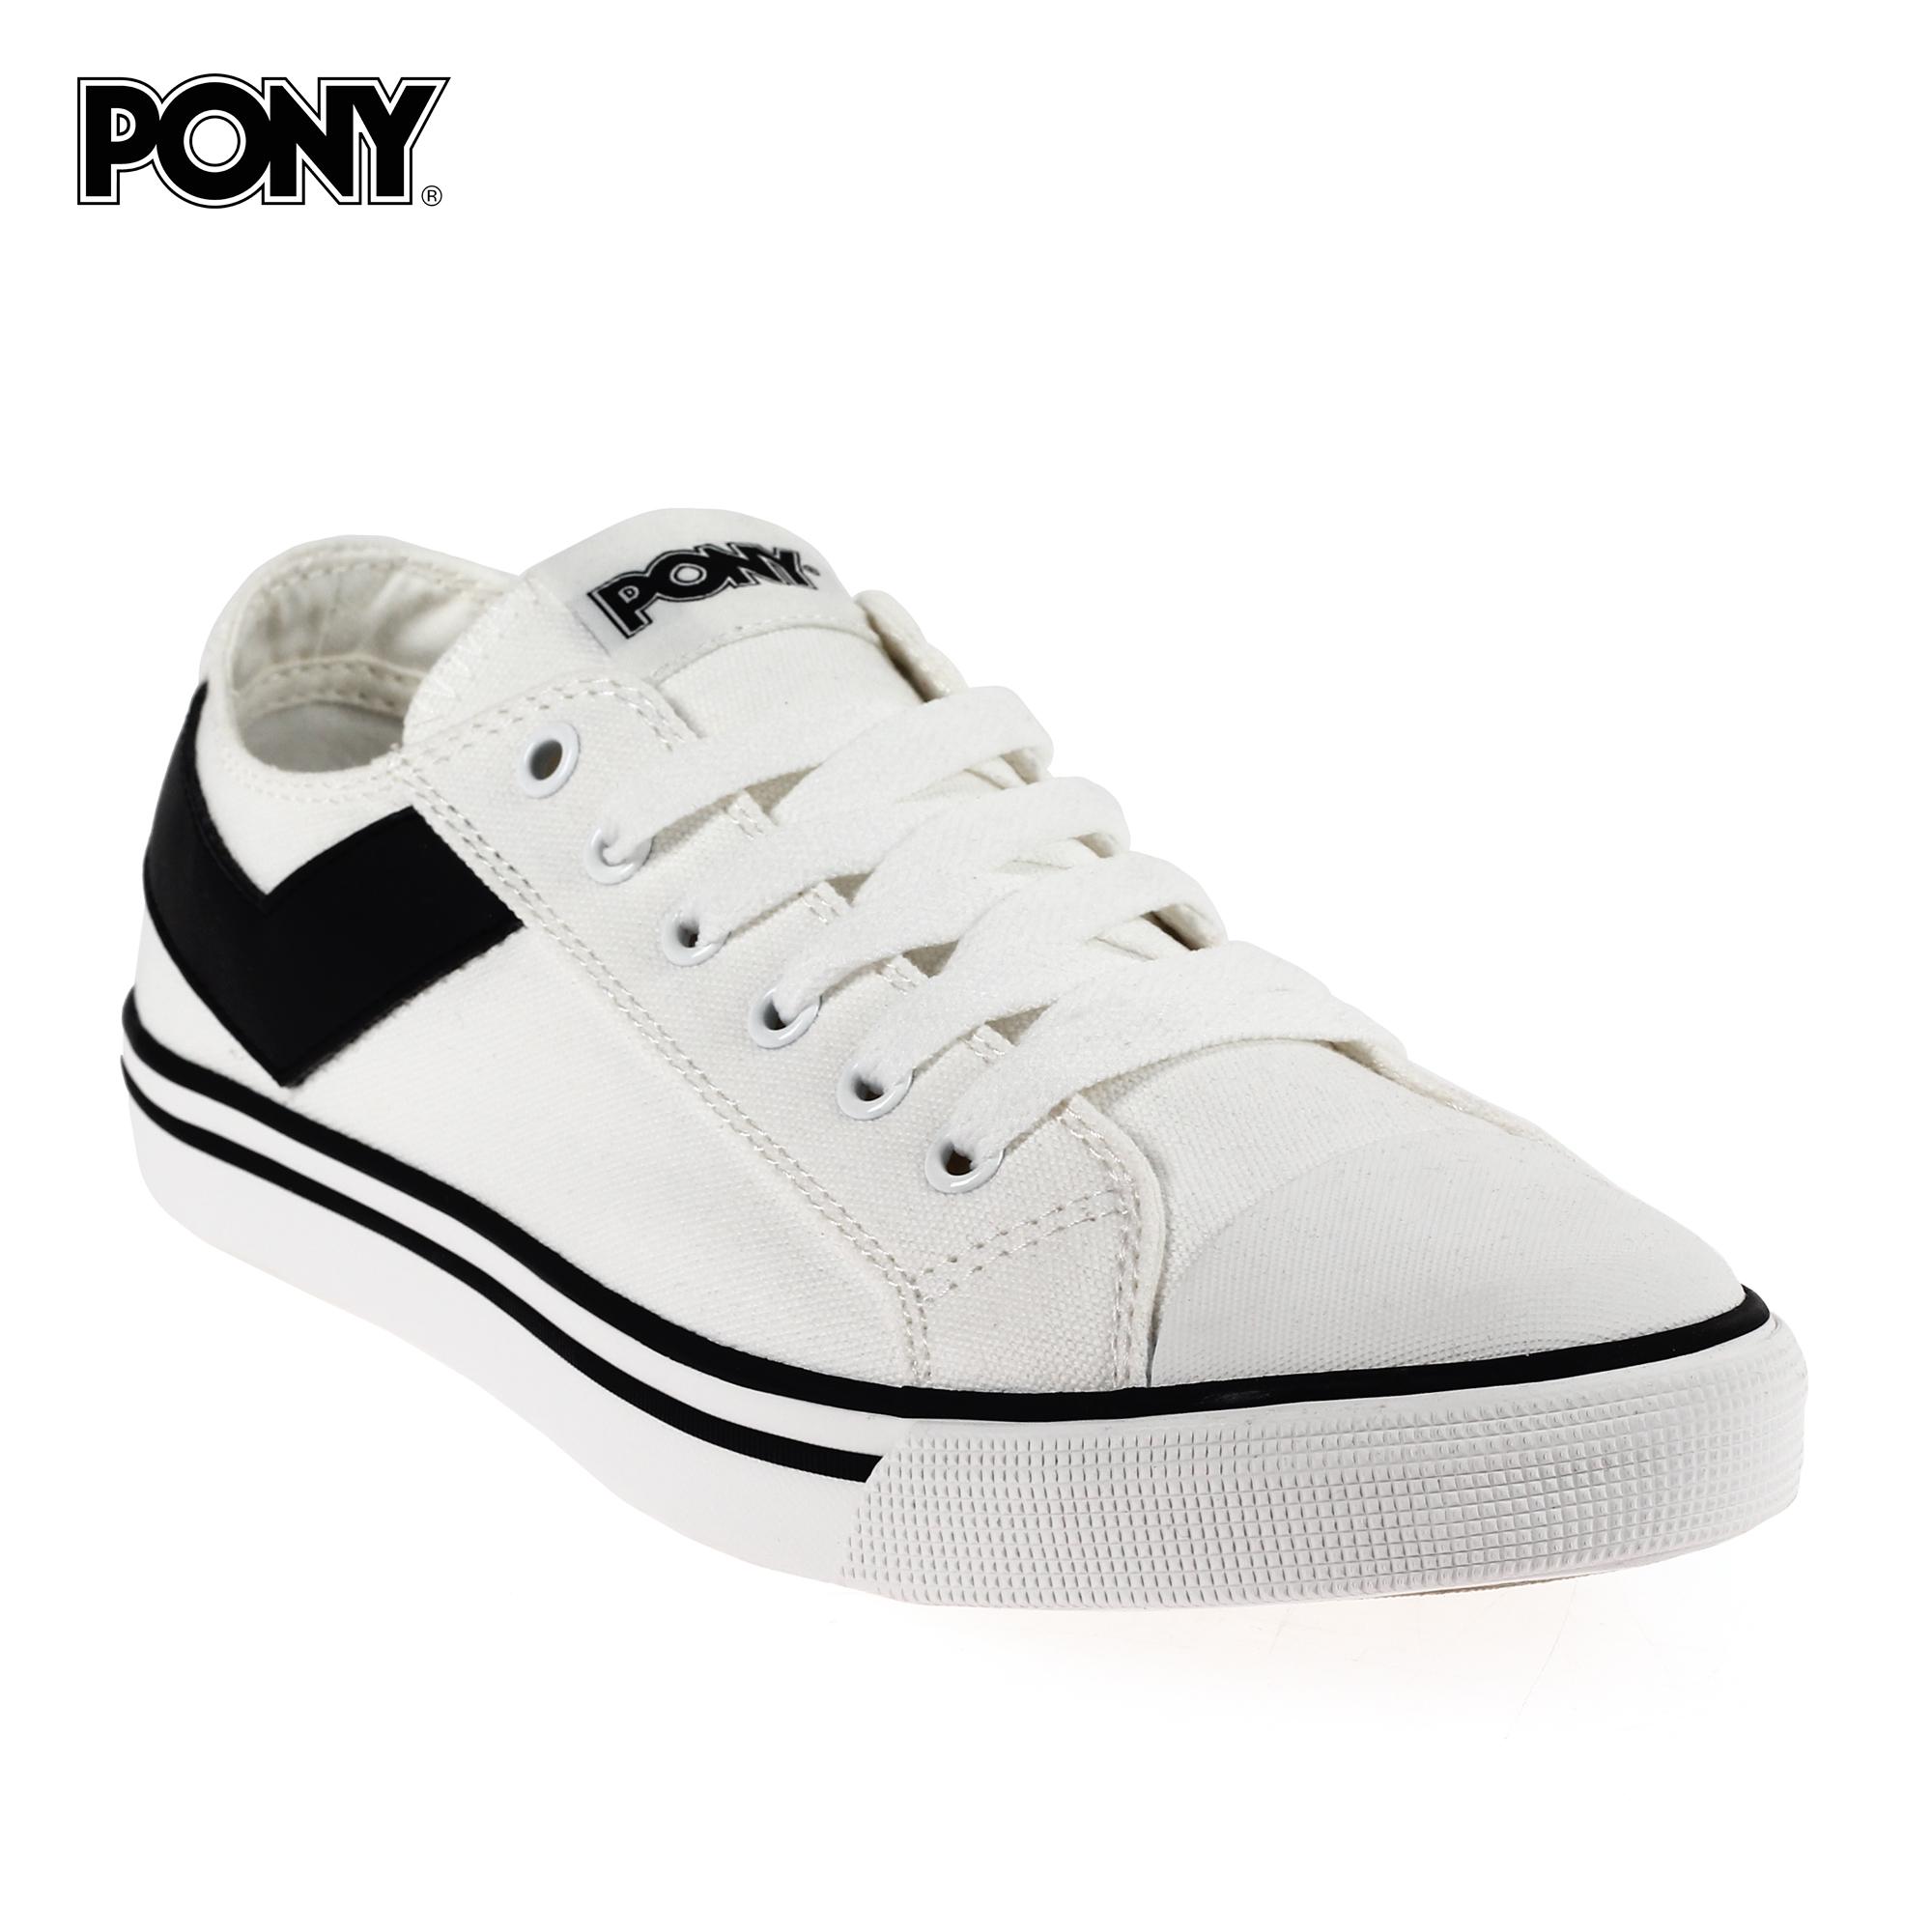 pony brand shoes